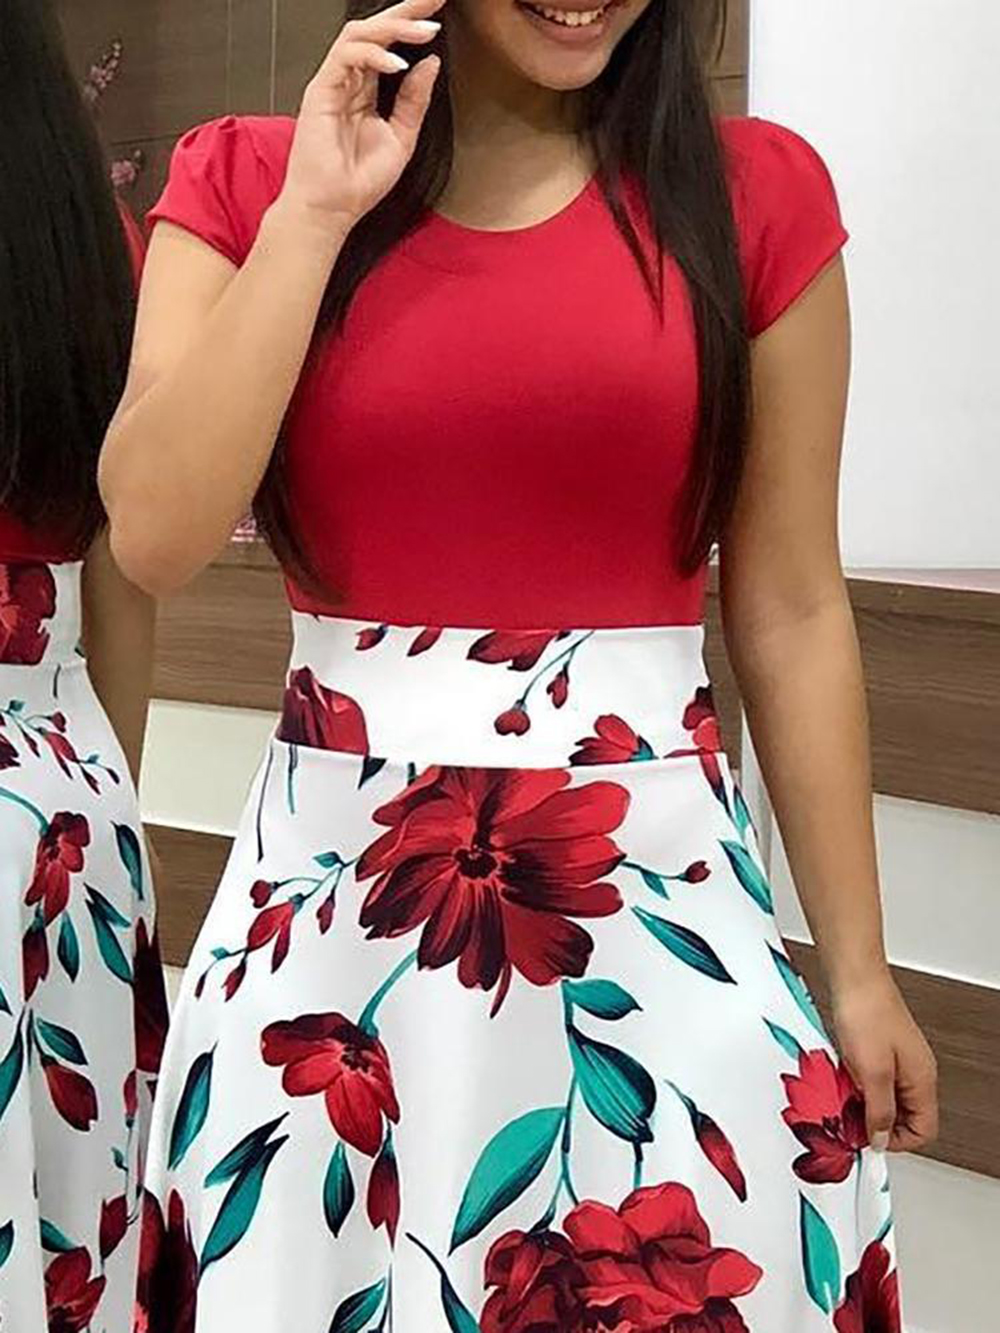 2019 Summer Fashion Temperament Flower Print Color Matching Dress Female Dress